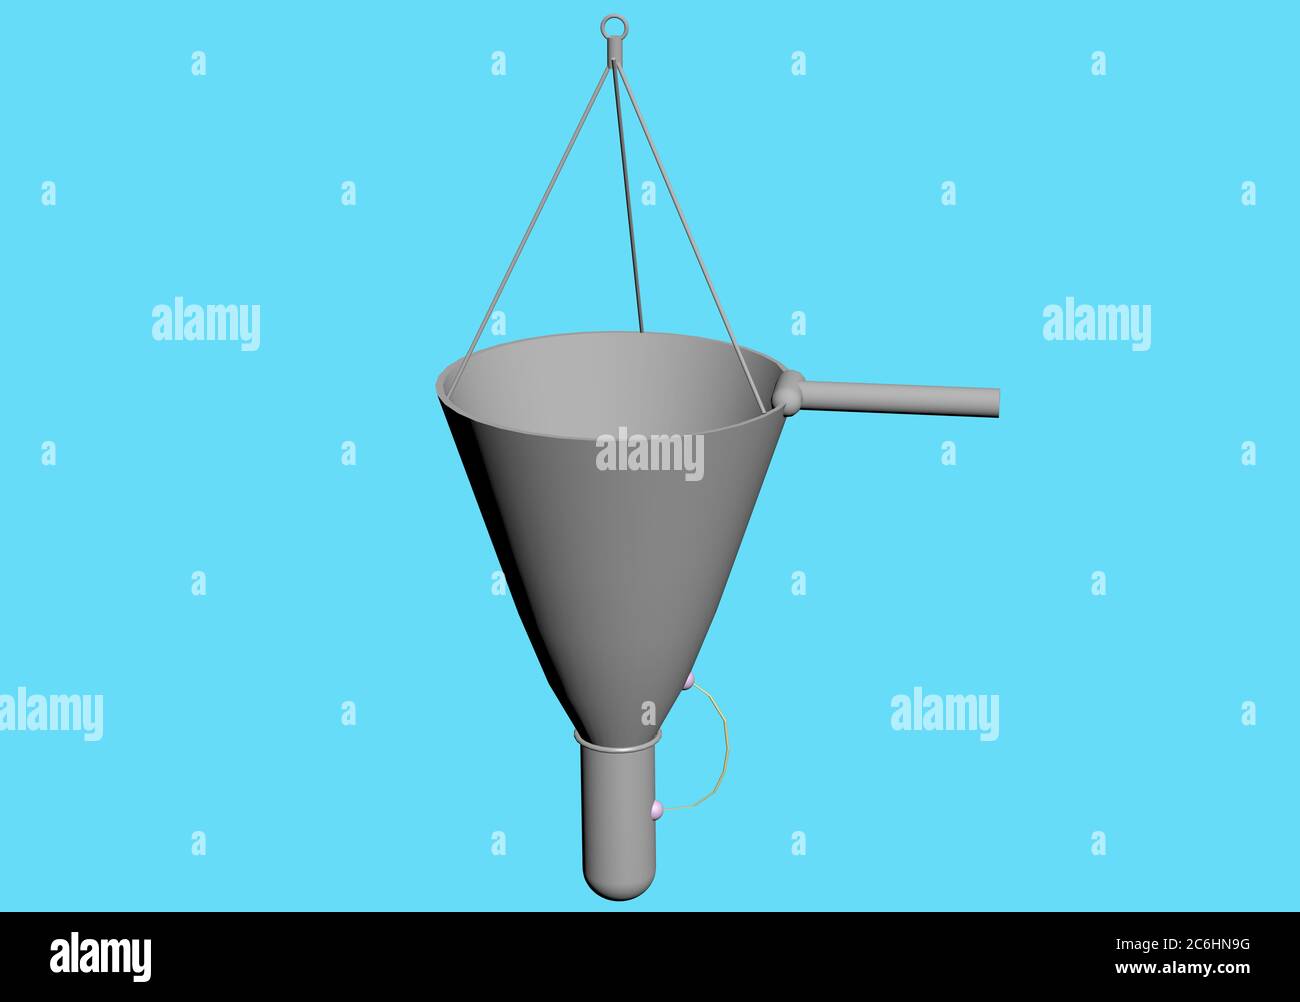 Plankton net with strings Stock Photo - Alamy